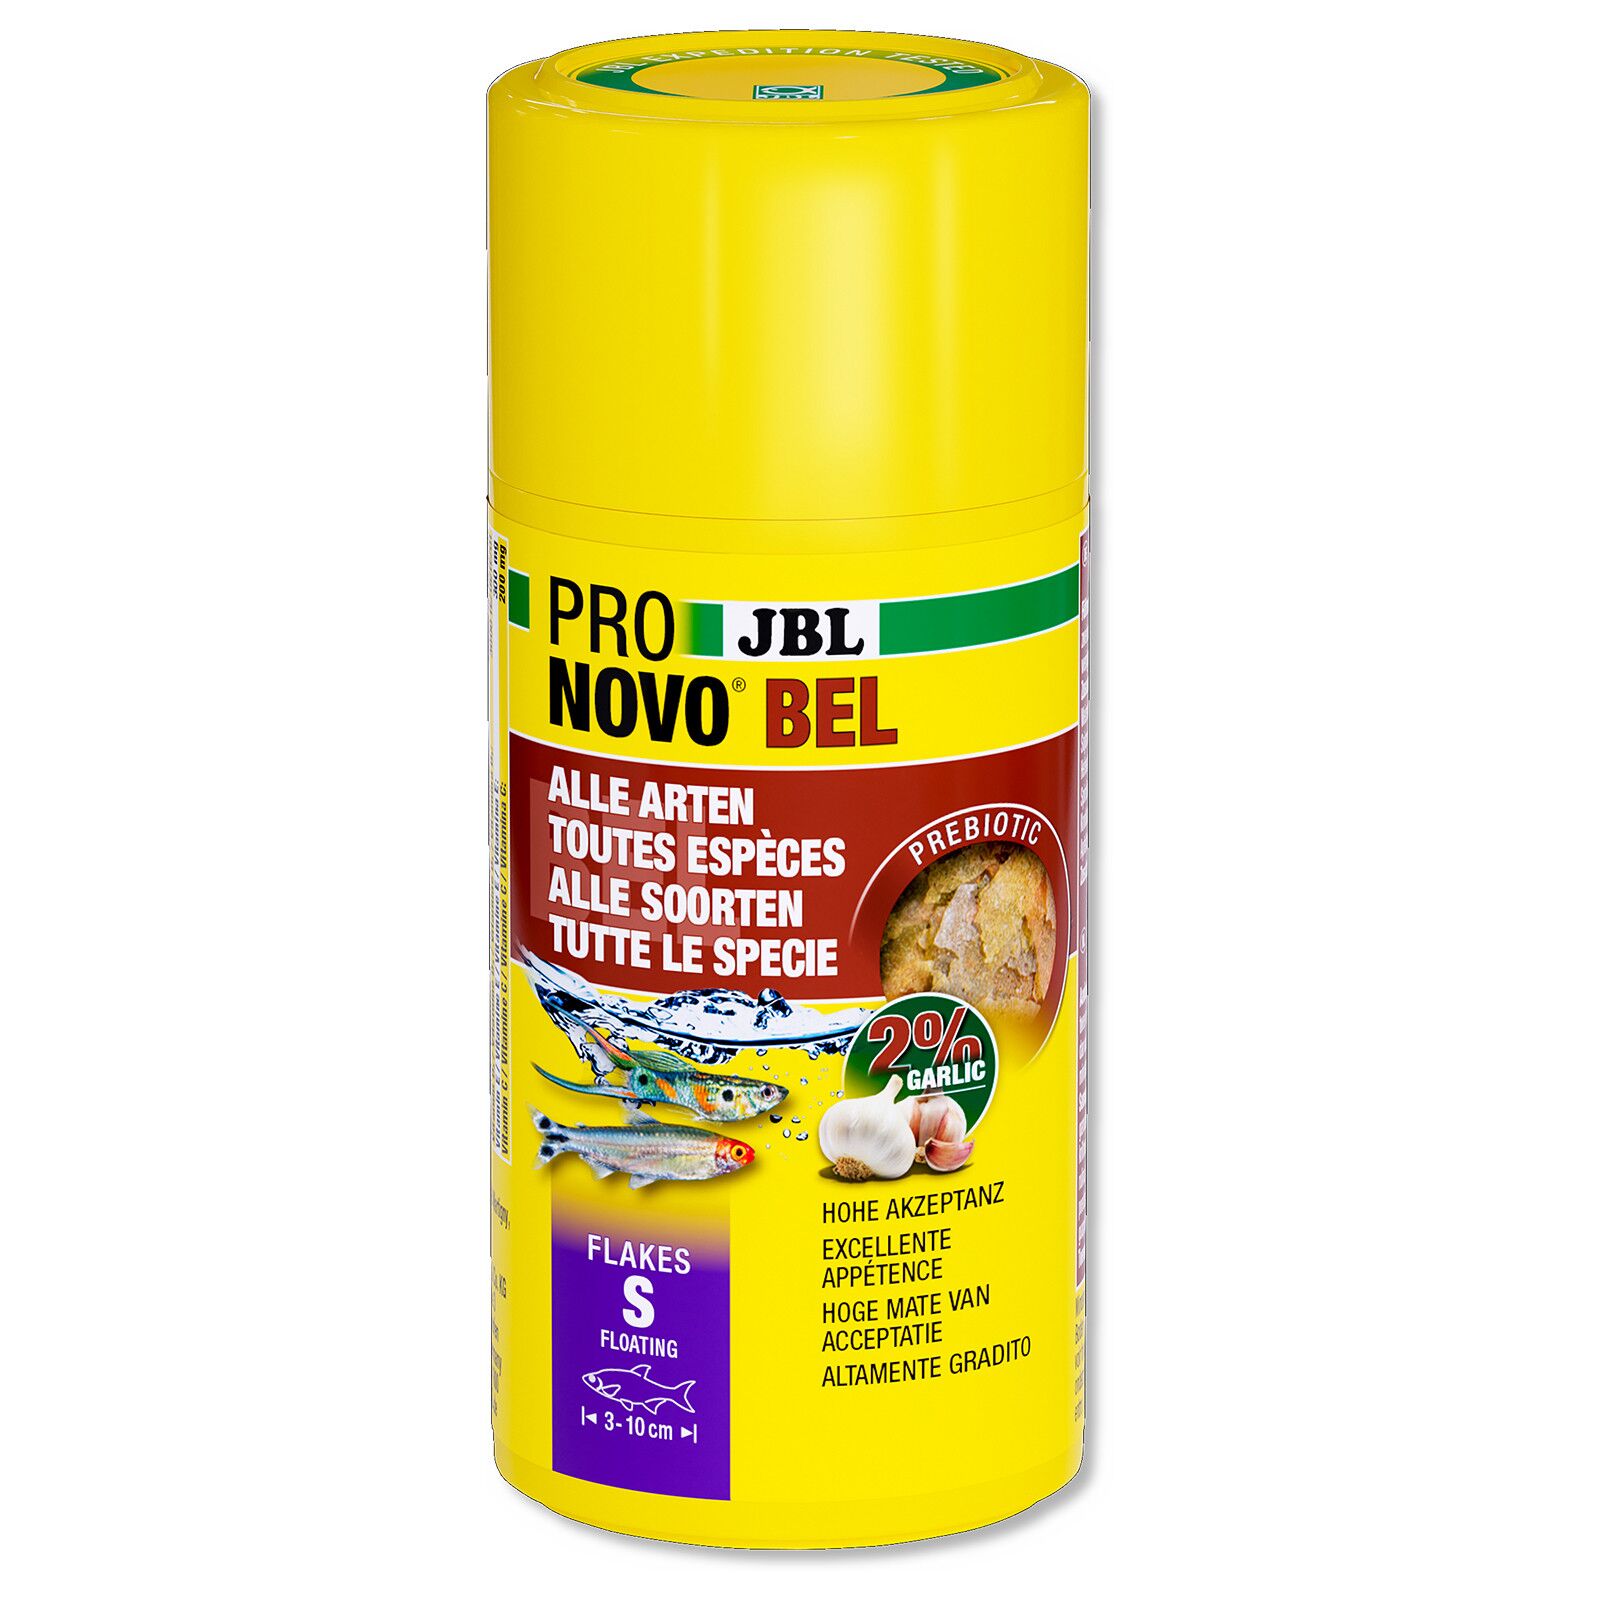 JBL - ProNovo - Bel Flakes S